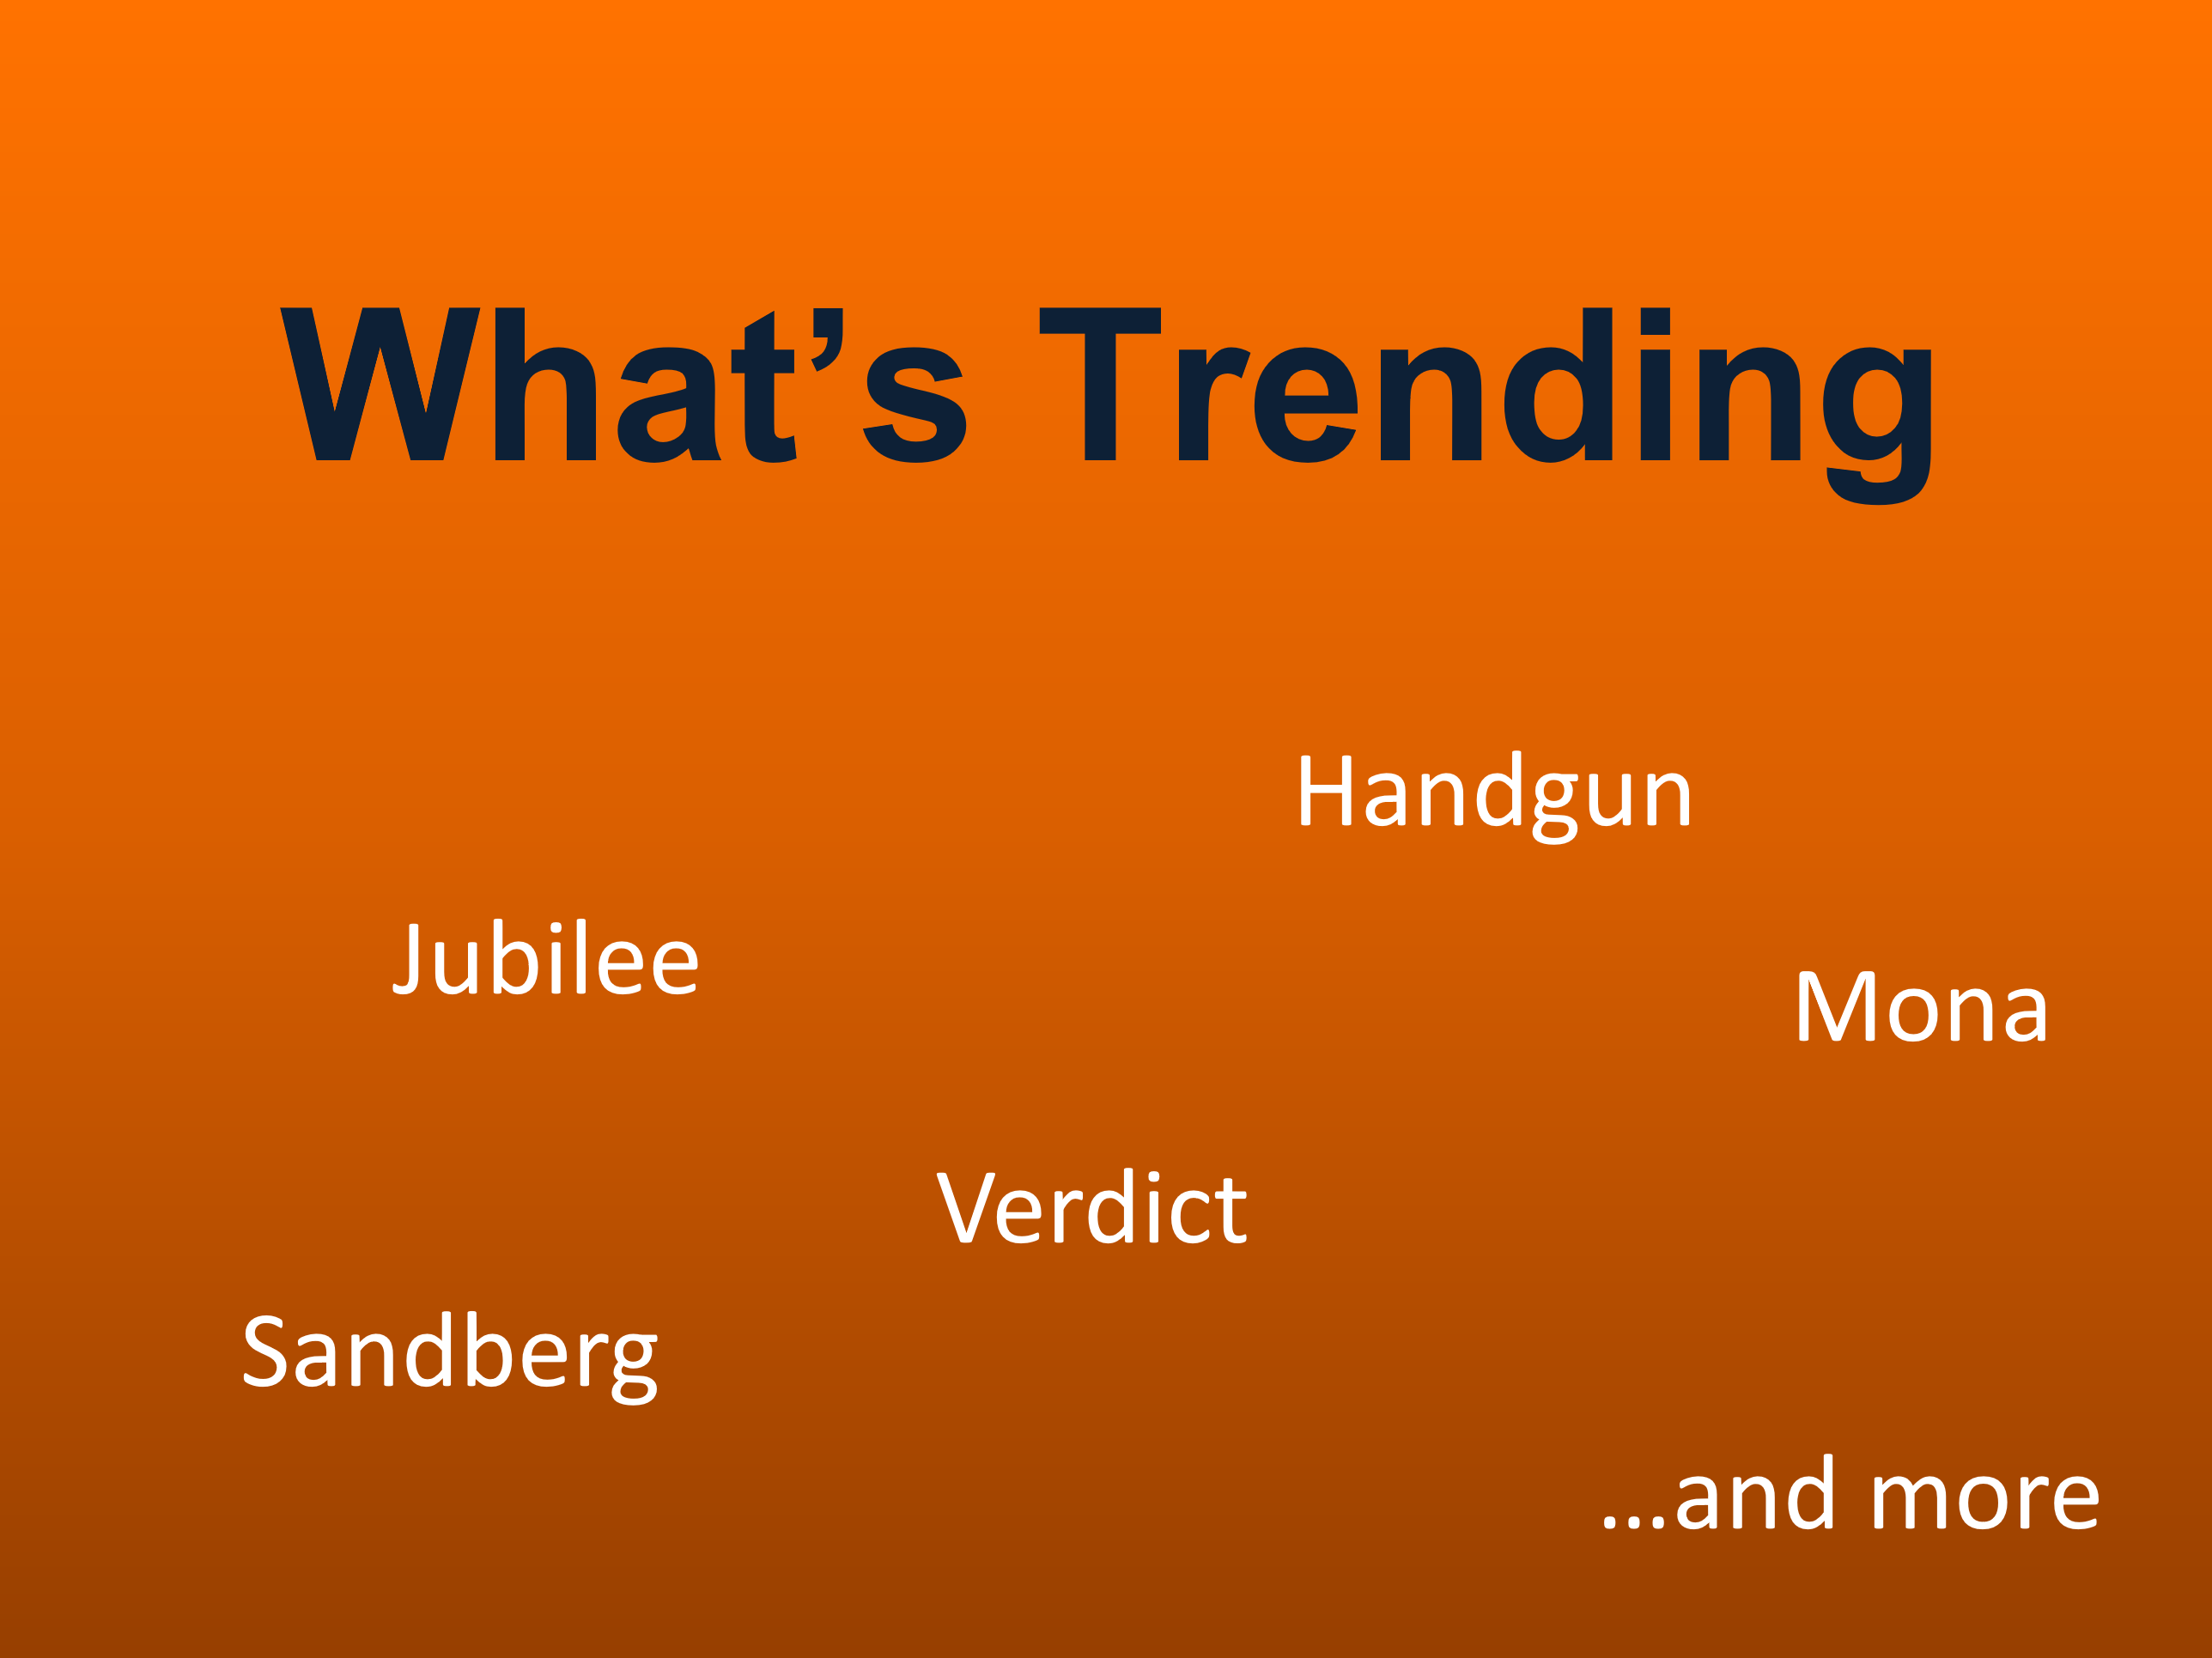 6/3/22: What's trending this week?